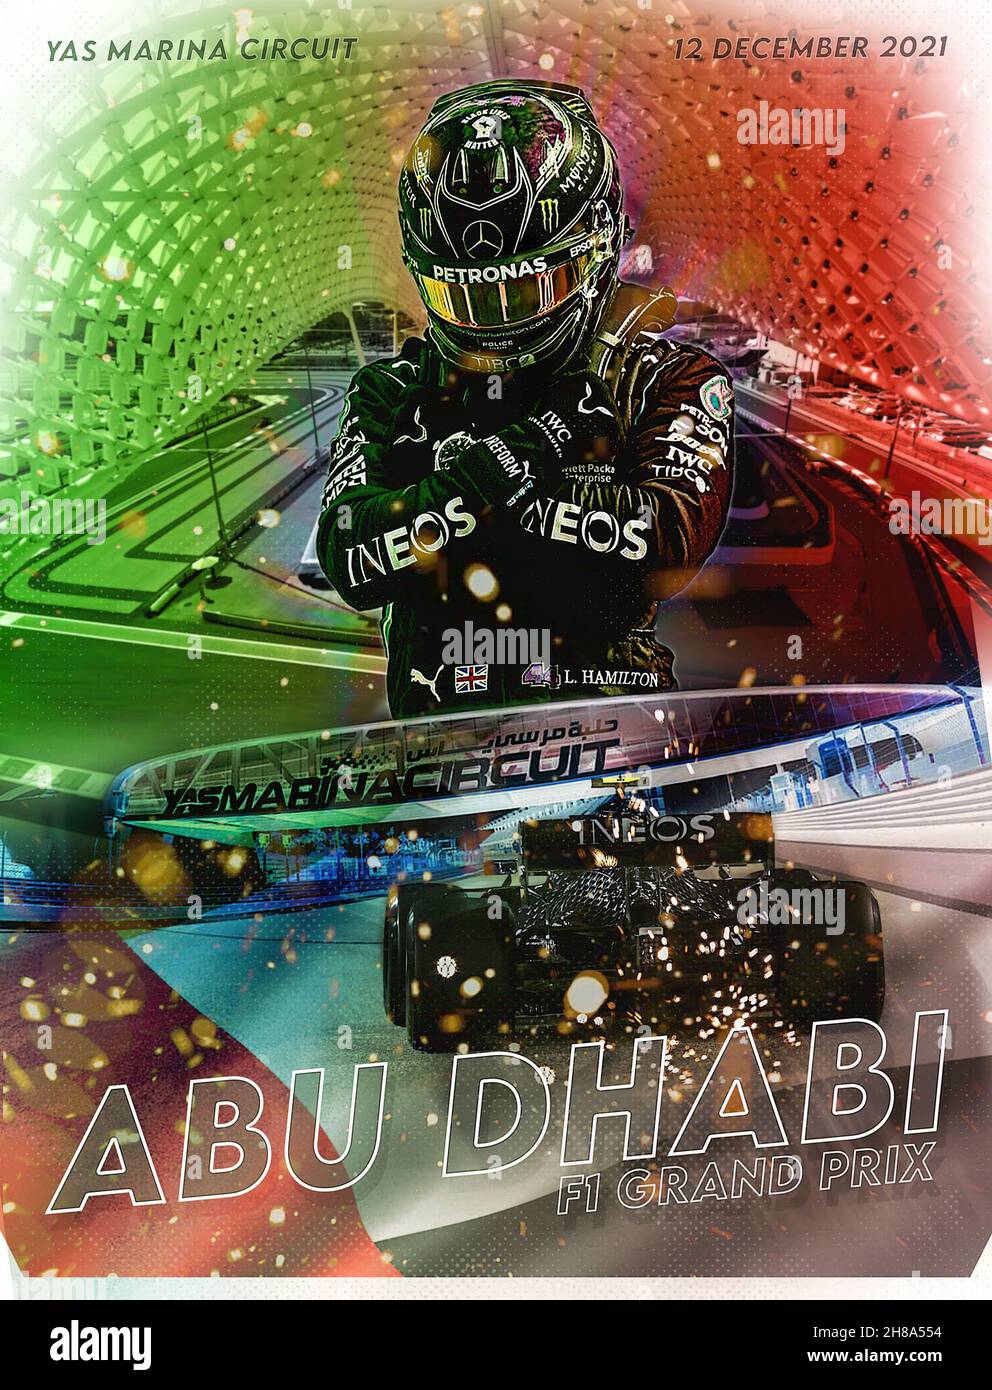 Abu Dhabi F1 Grand Prix Race Weekend Poster Stock Photo